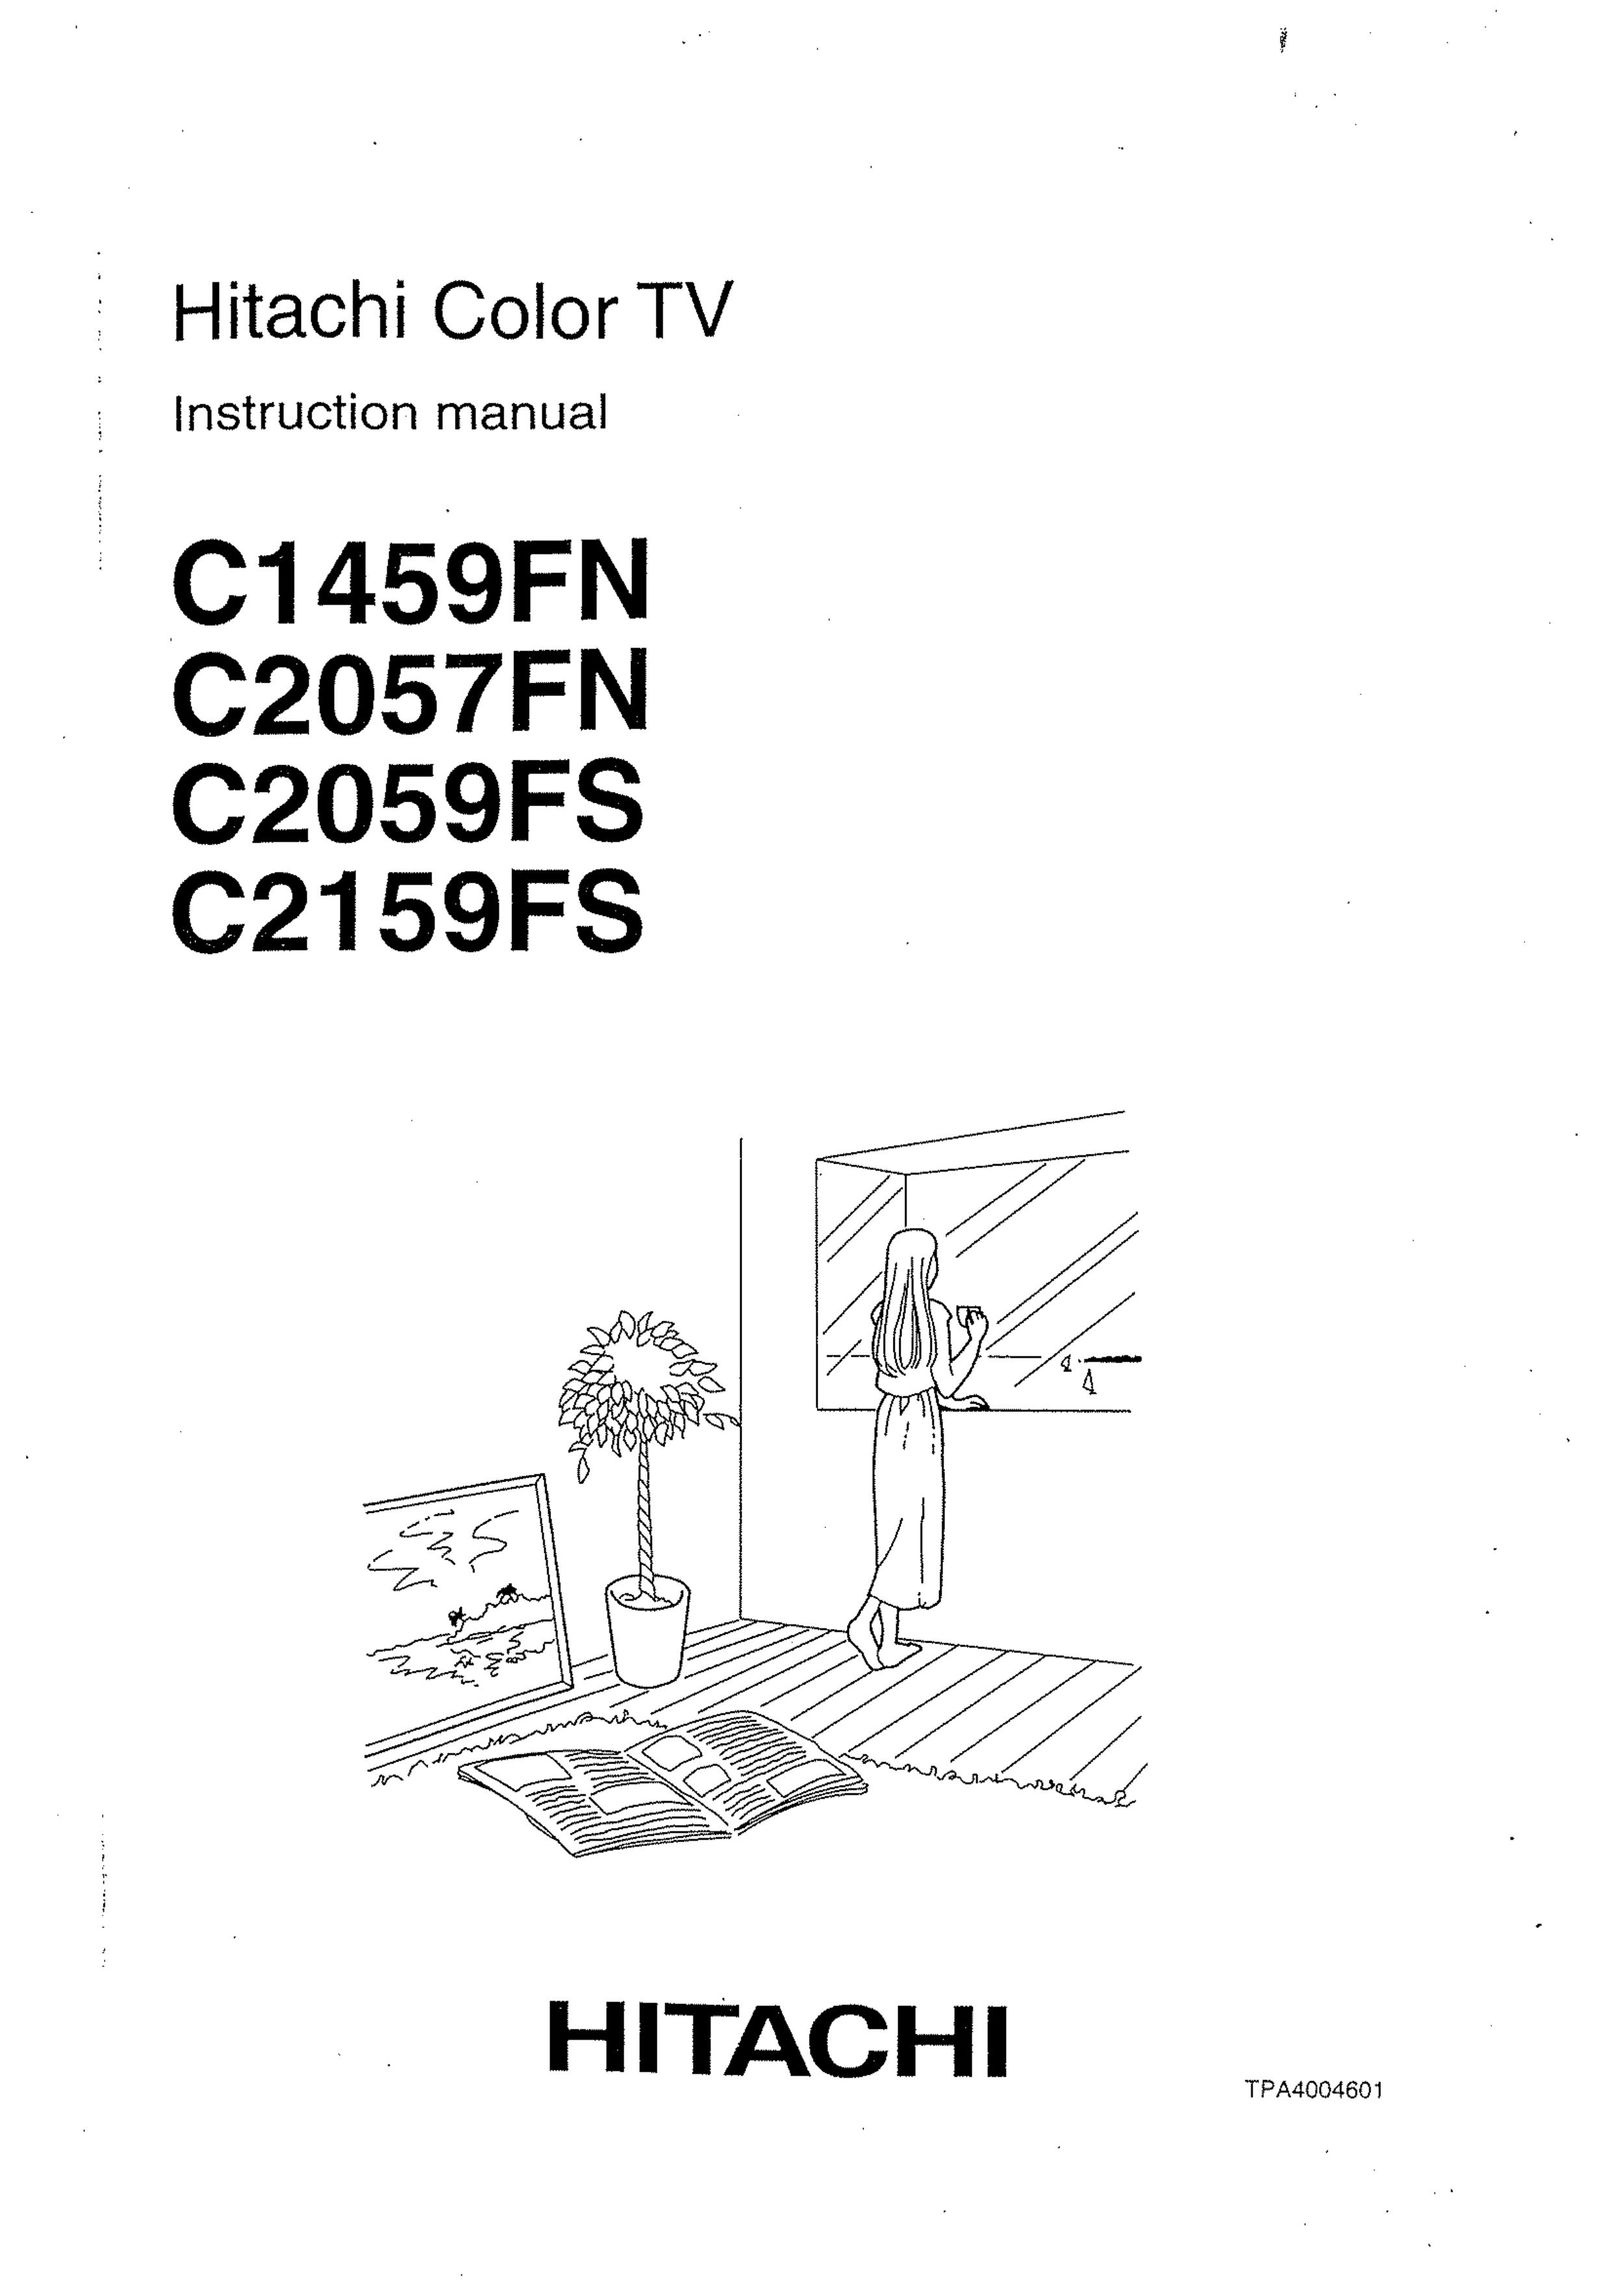 Hitachi C1459FN CRT Television User Manual